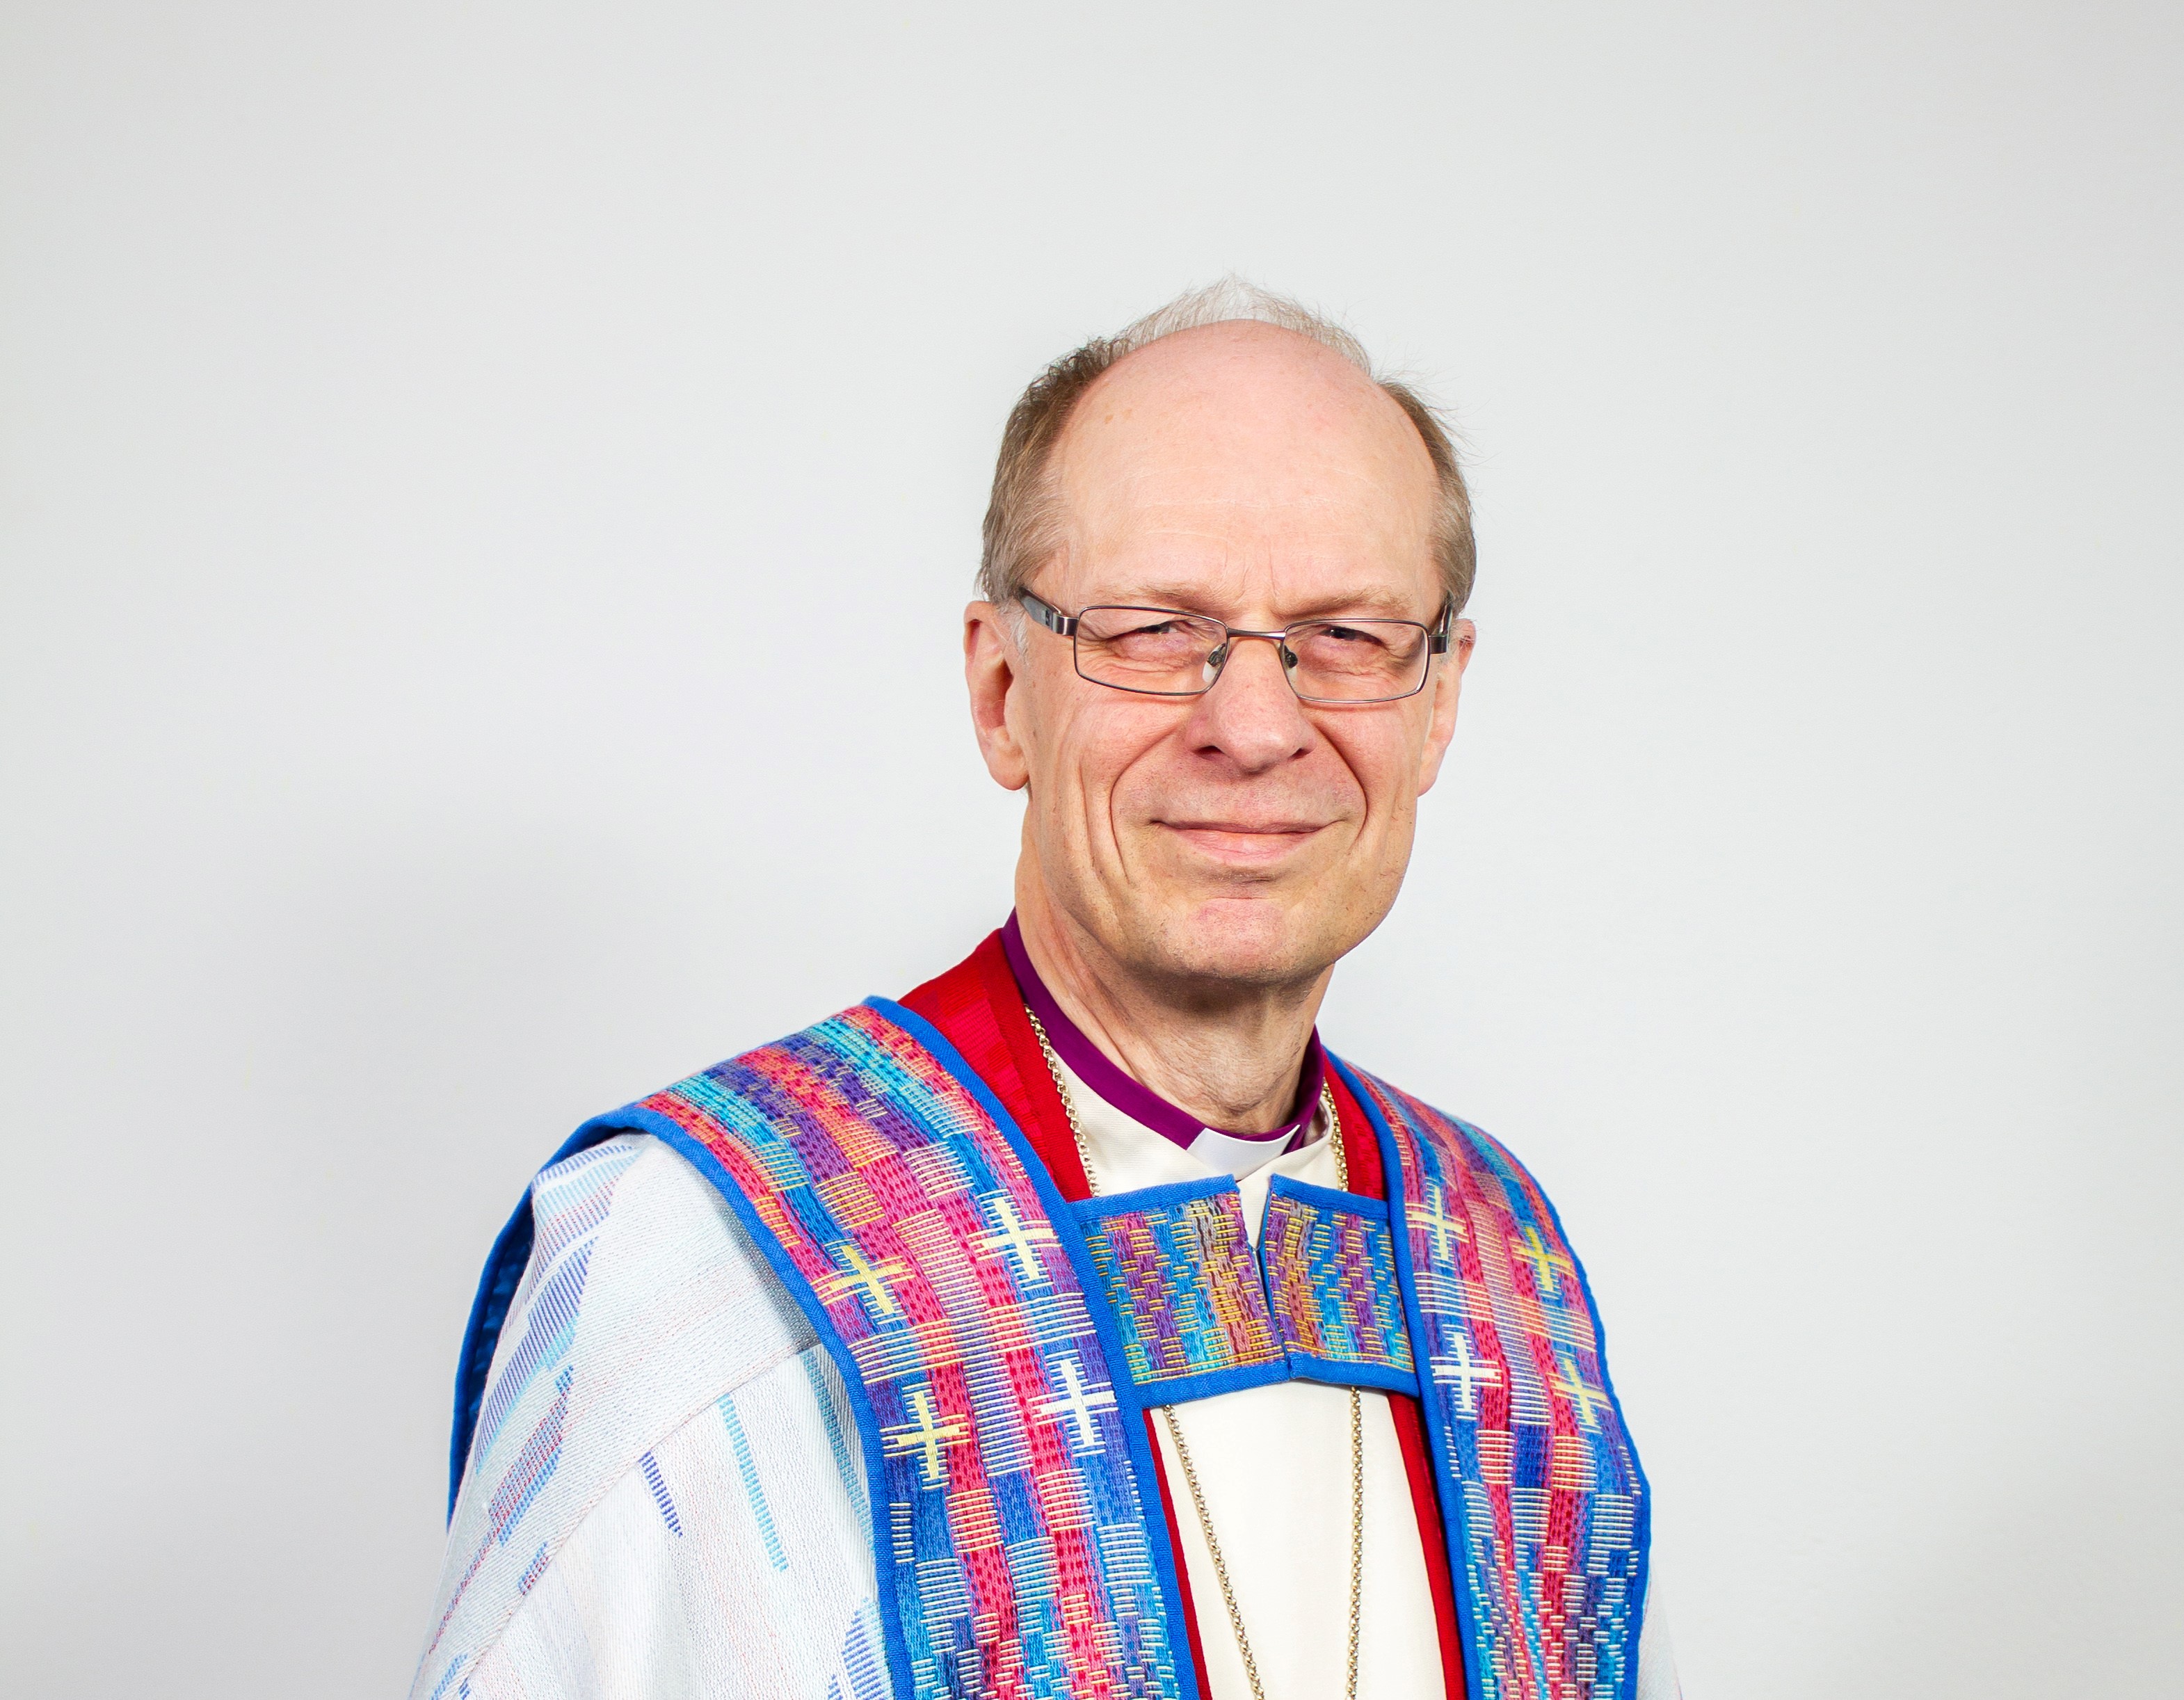 Biskopens juleandakt 2021 - Pispan jouluharttaus 2021